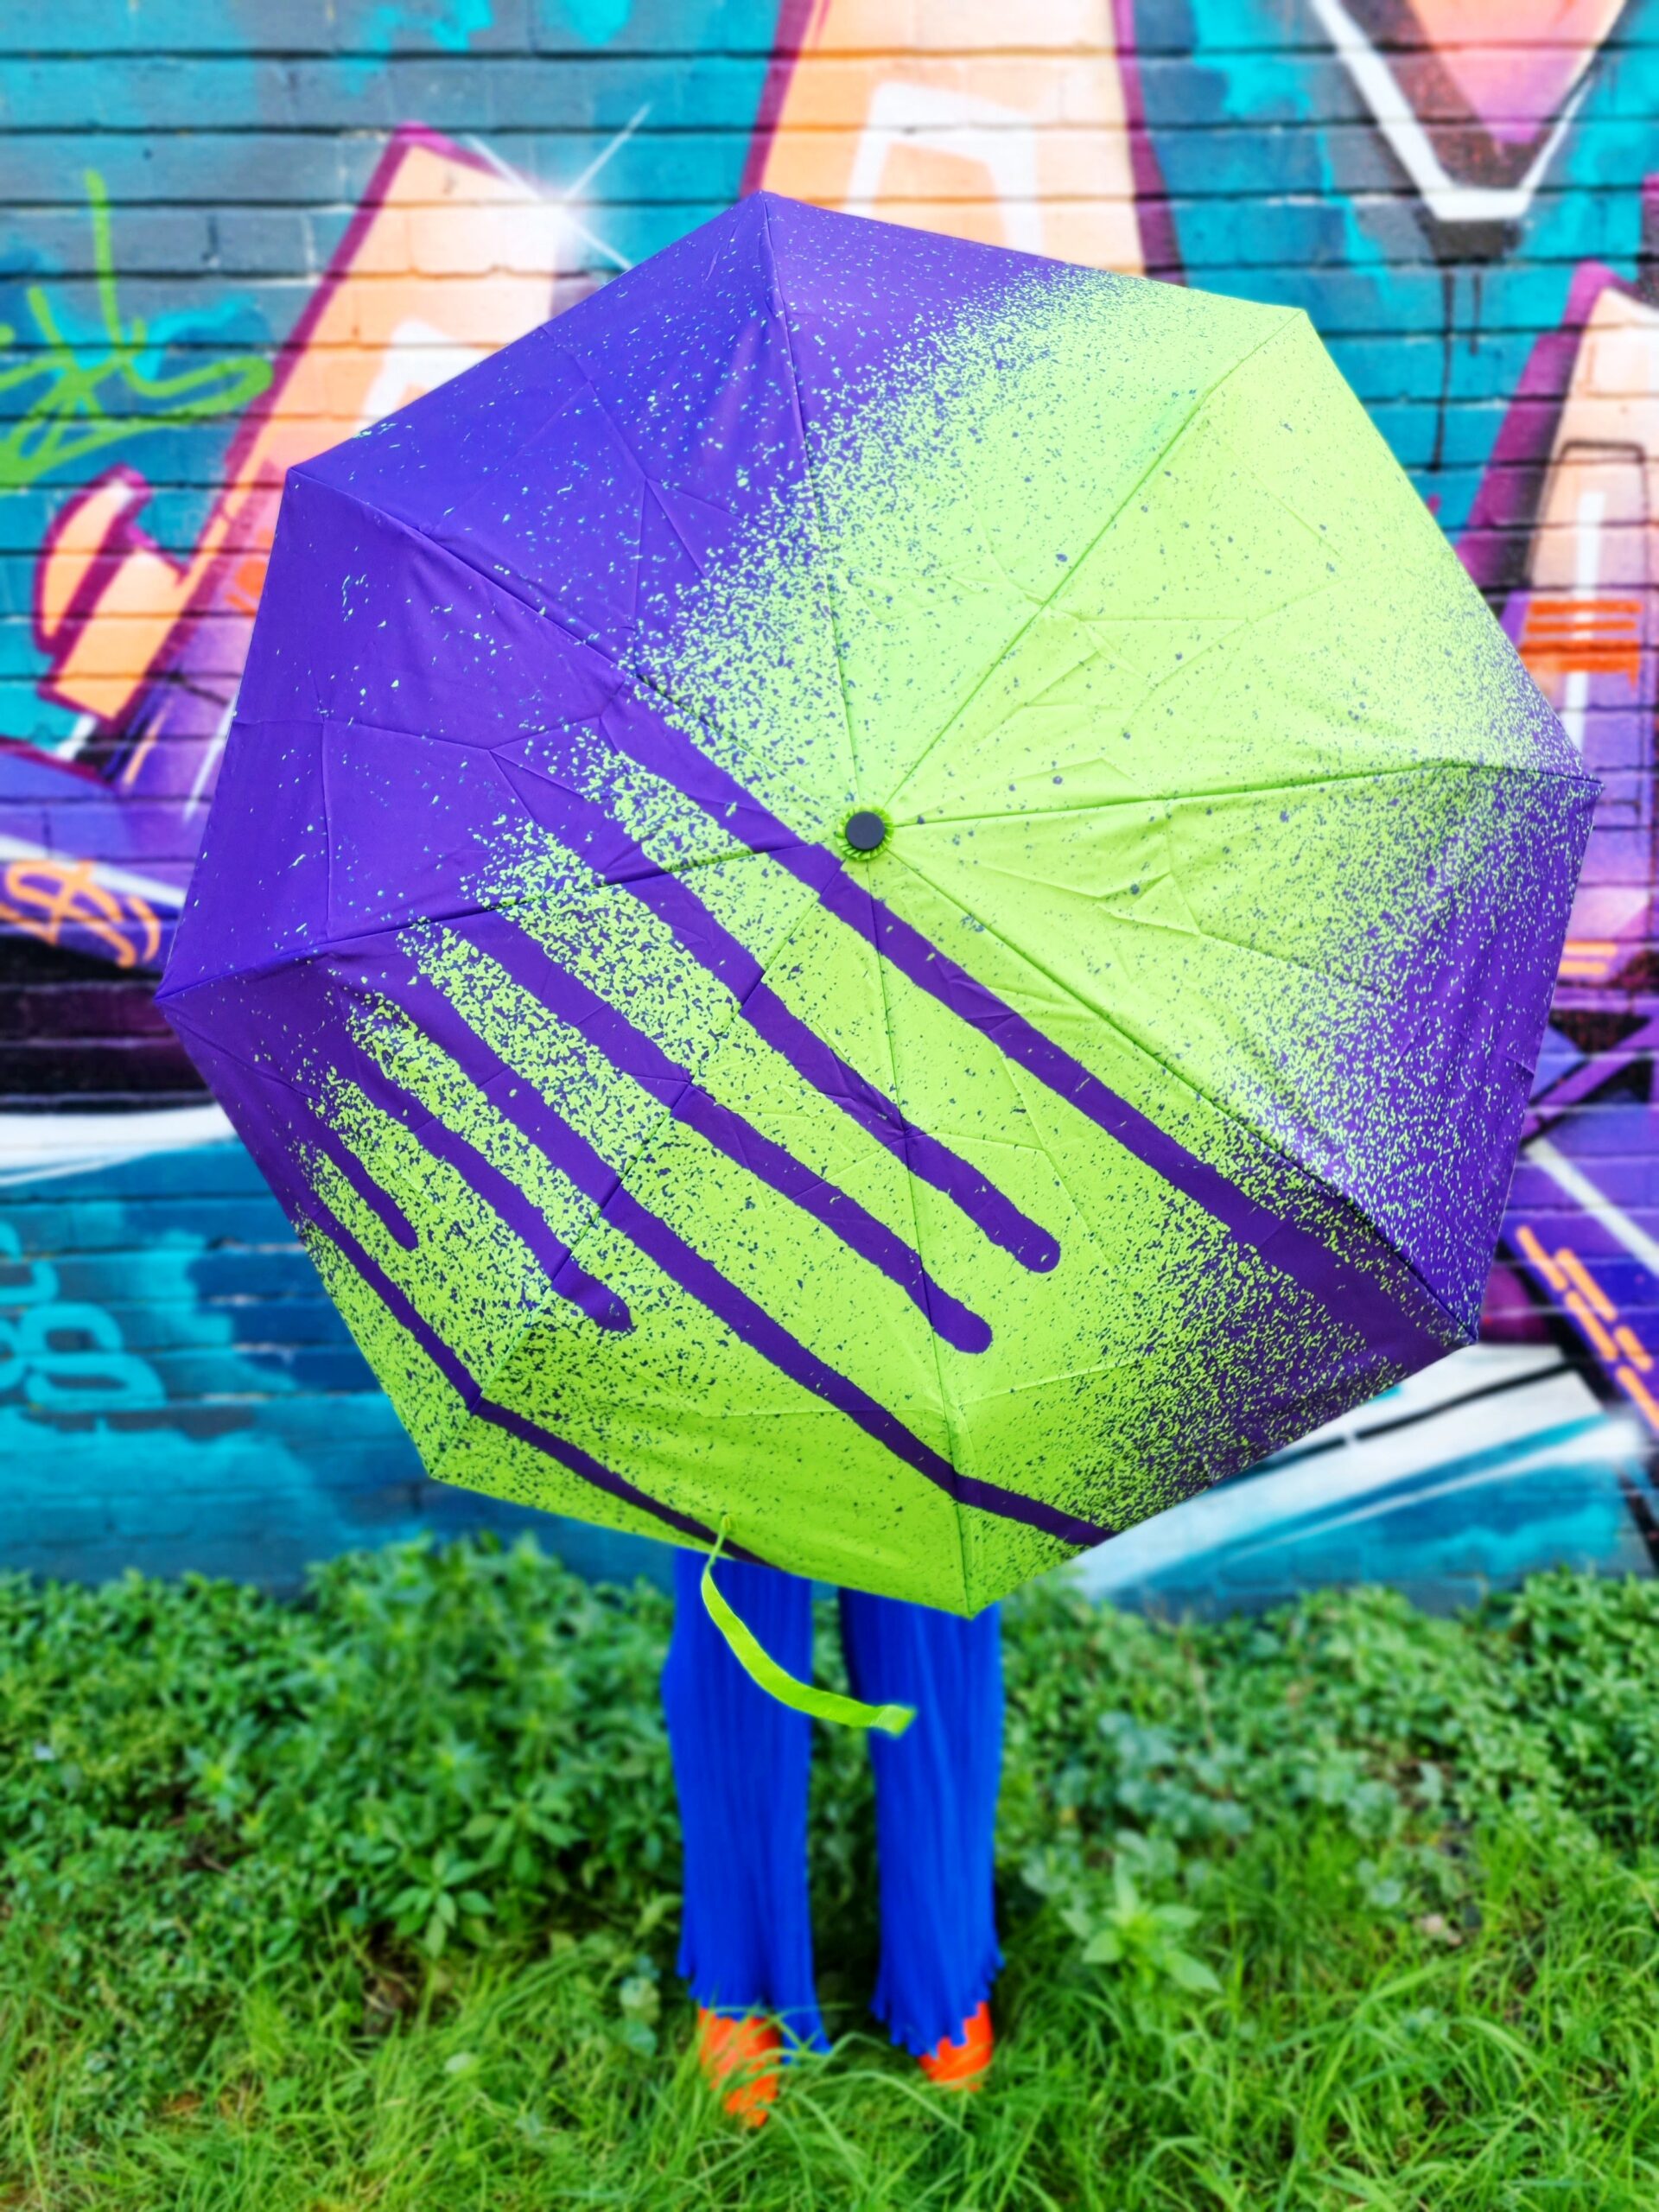 <img src="jumble.jpg" alt="jumble and co green and purple umbrella"/>